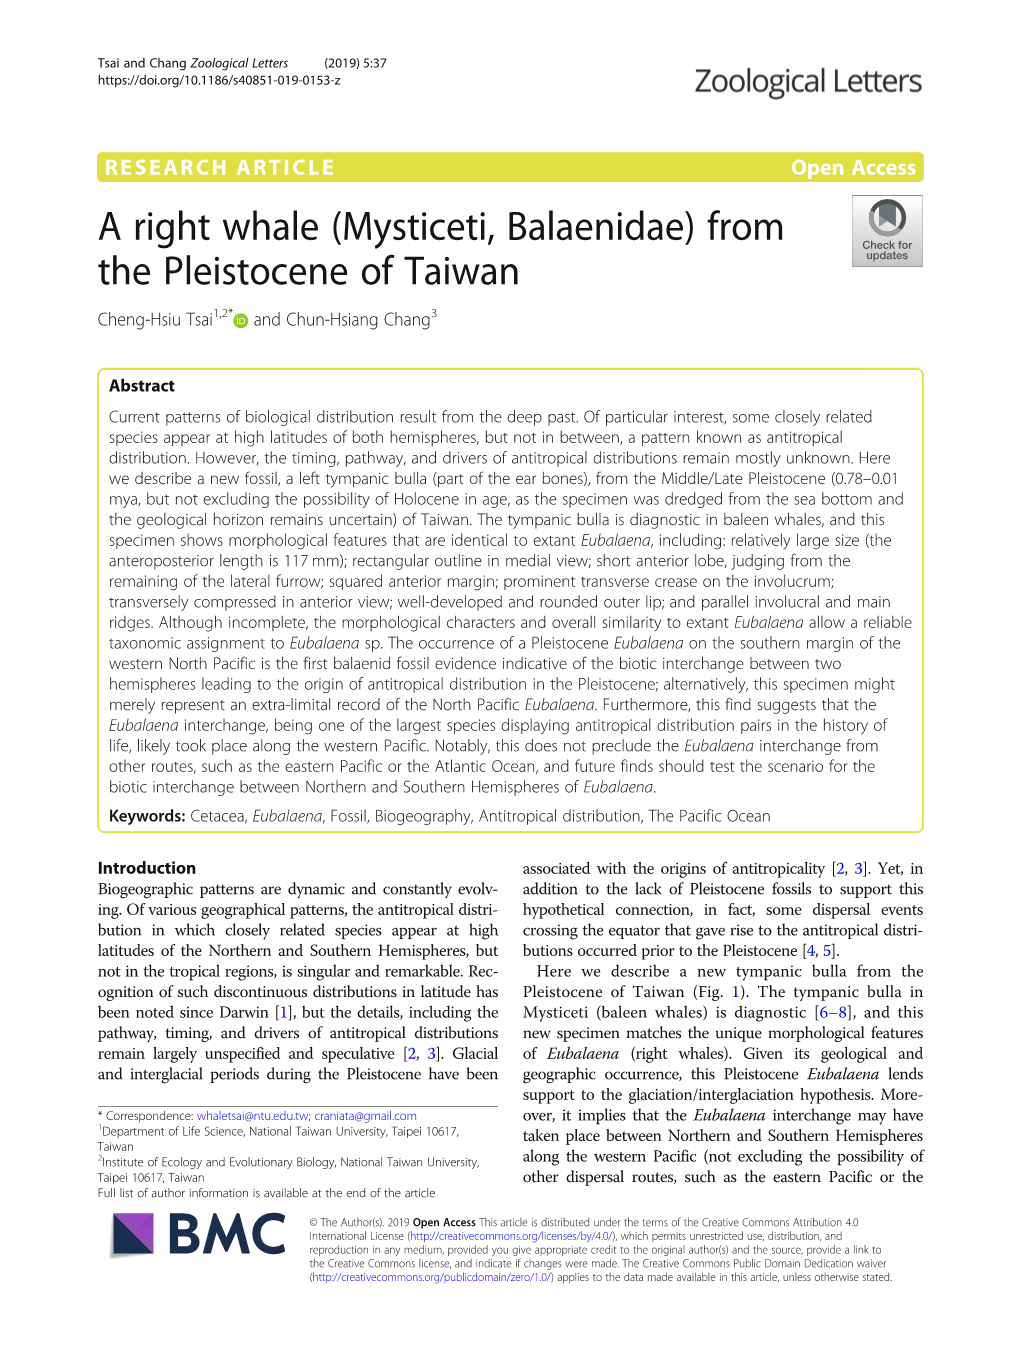 A Right Whale (Mysticeti, Balaenidae) from the Pleistocene of Taiwan Cheng-Hsiu Tsai1,2* and Chun-Hsiang Chang3